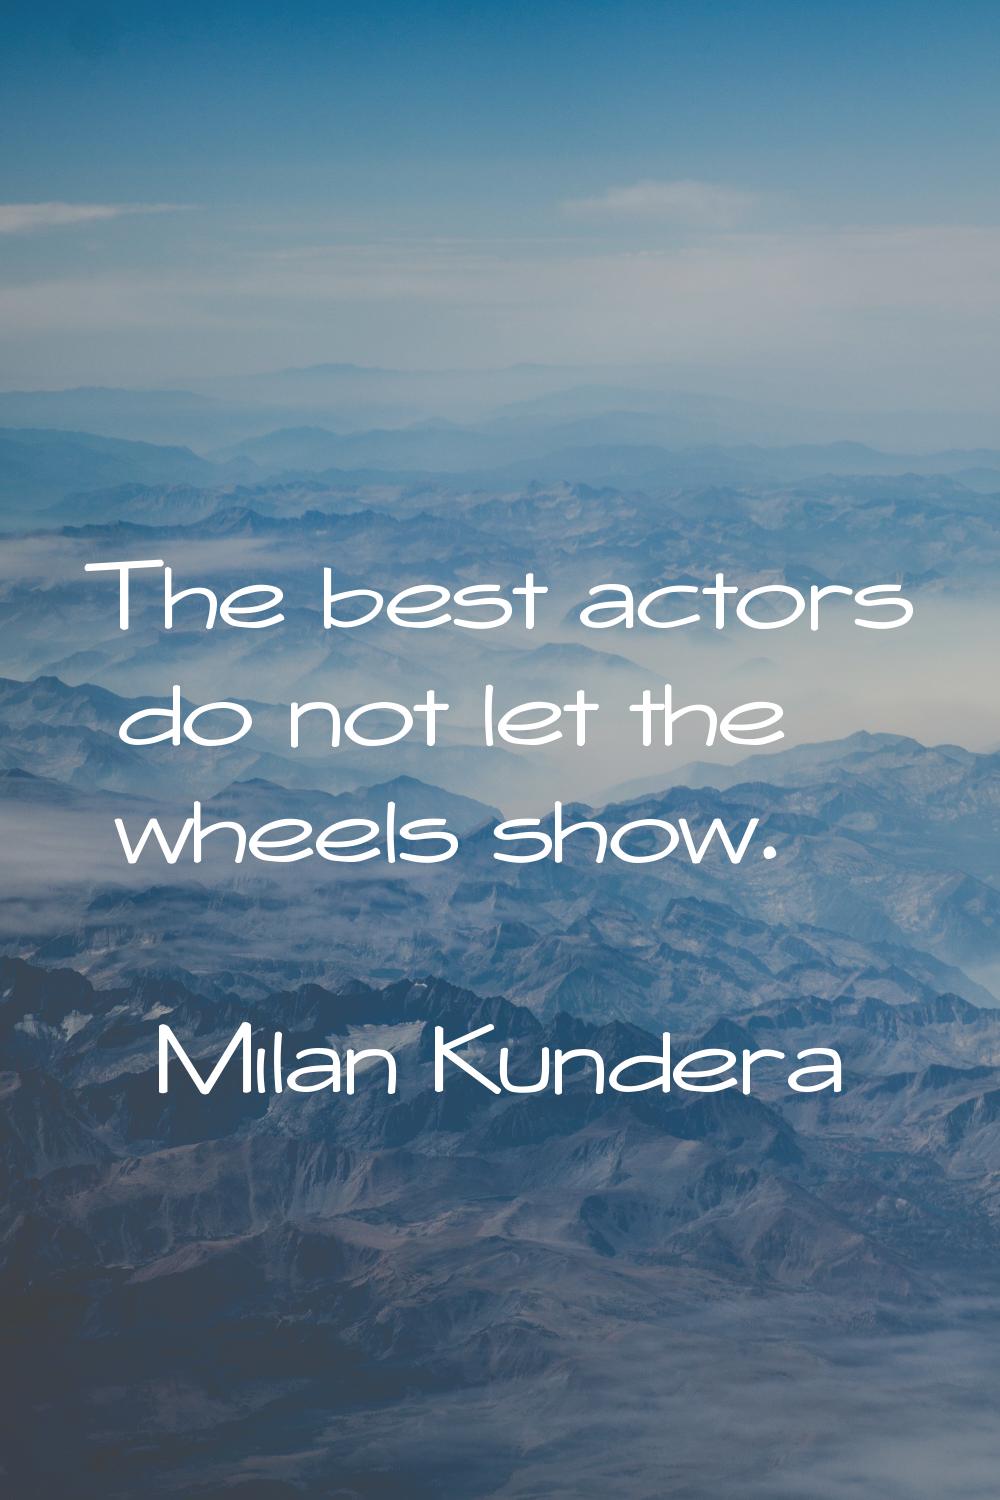 The best actors do not let the wheels show.